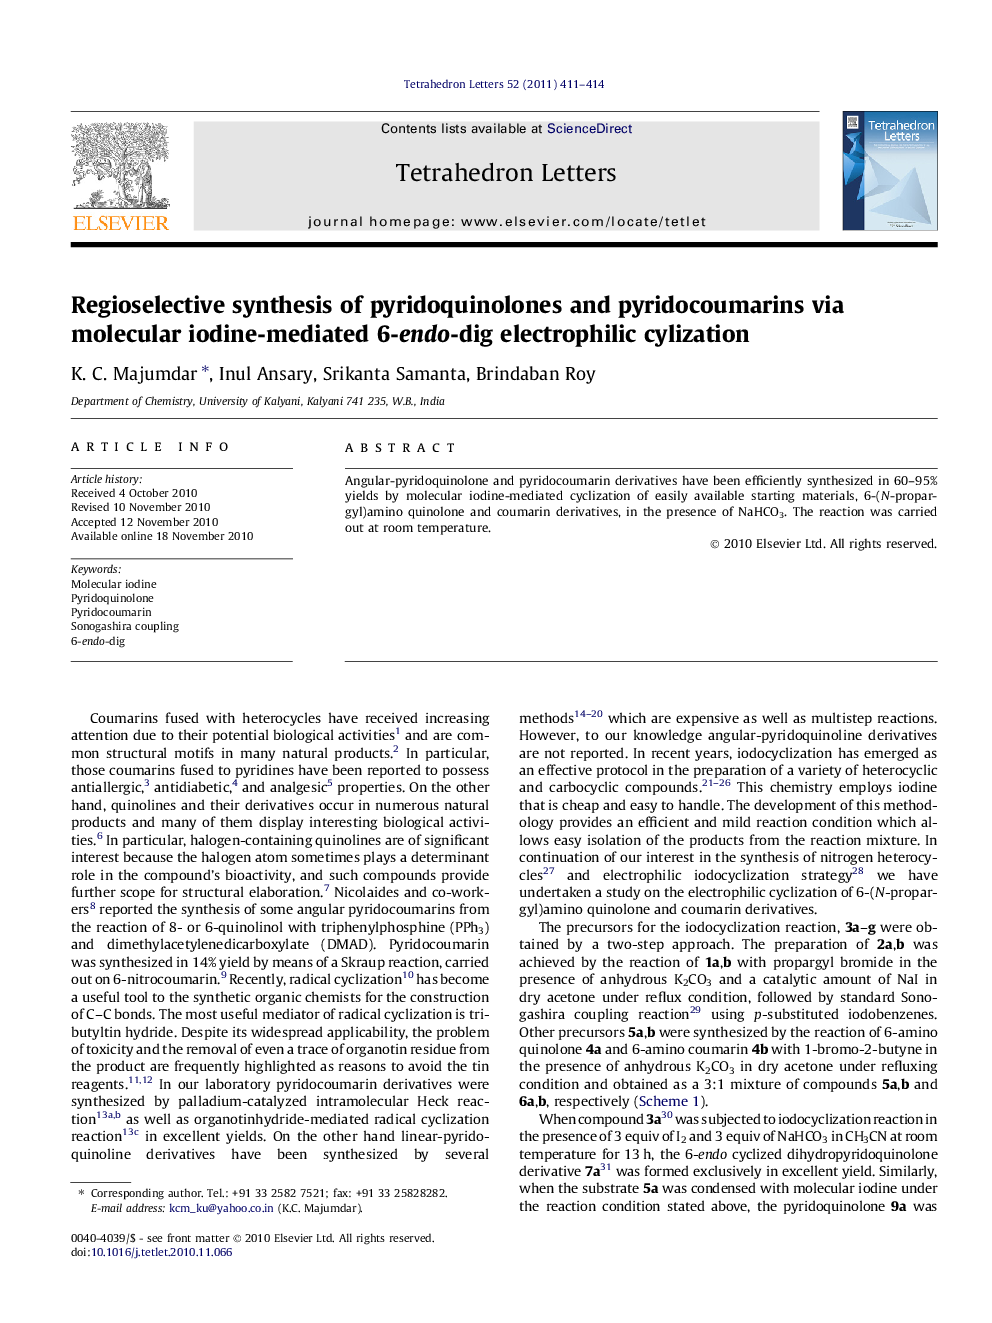 Regioselective synthesis of pyridoquinolones and pyridocoumarins via molecular iodine-mediated 6-endo-dig electrophilic cylization